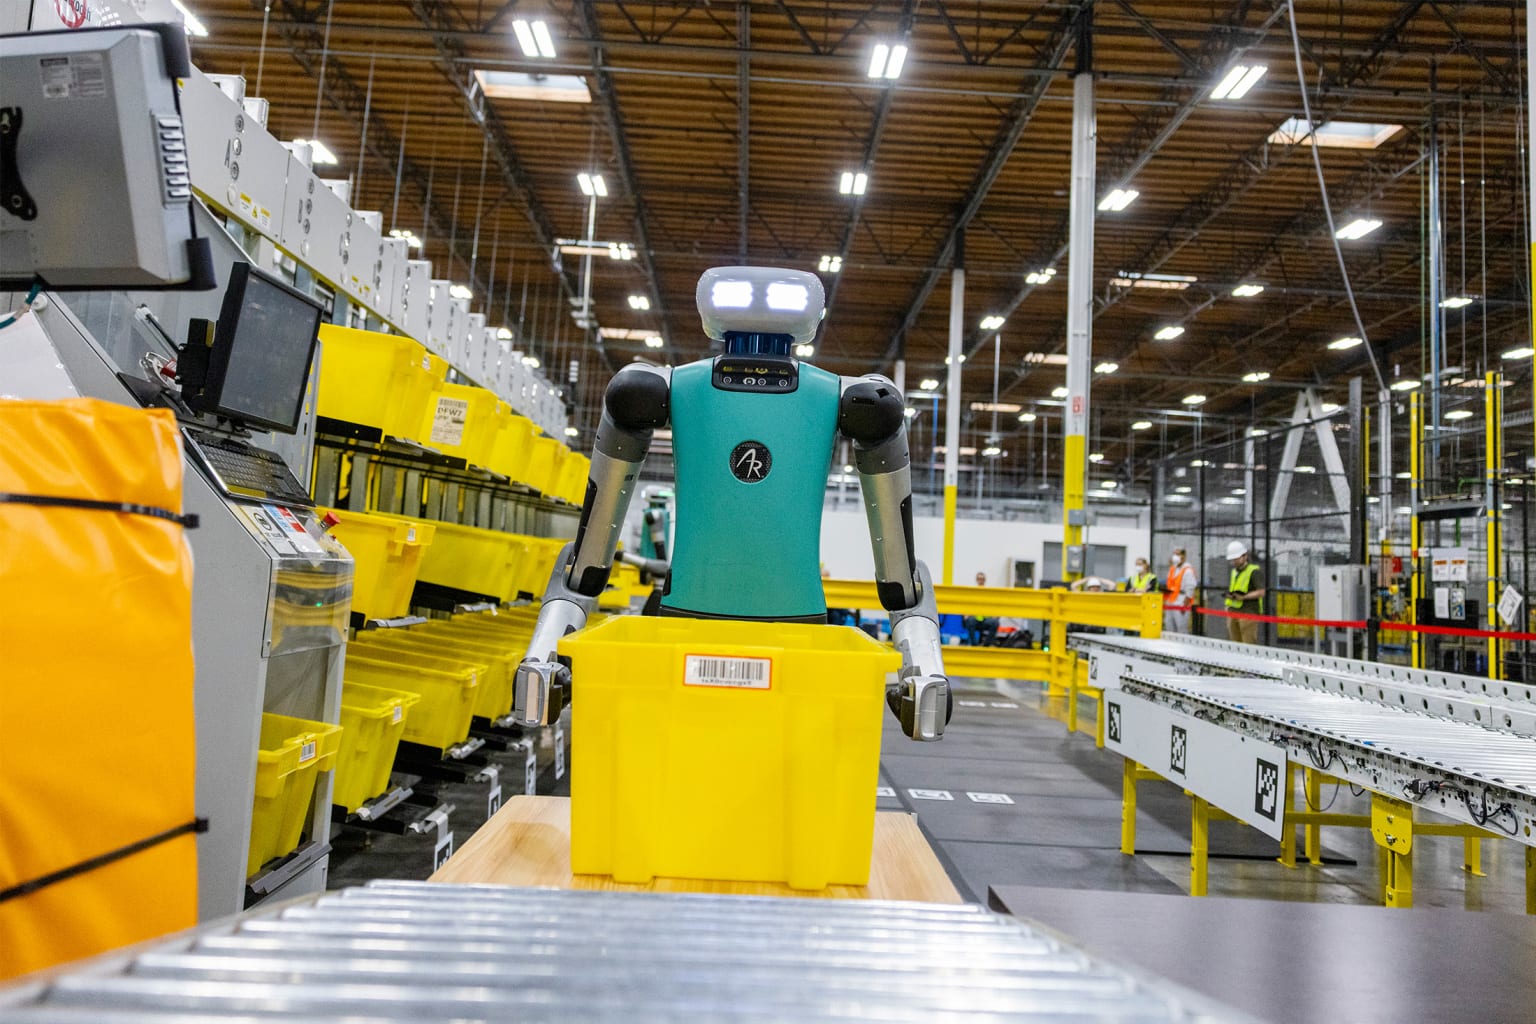 Amazon robot carrying a bin from conveyor belt.